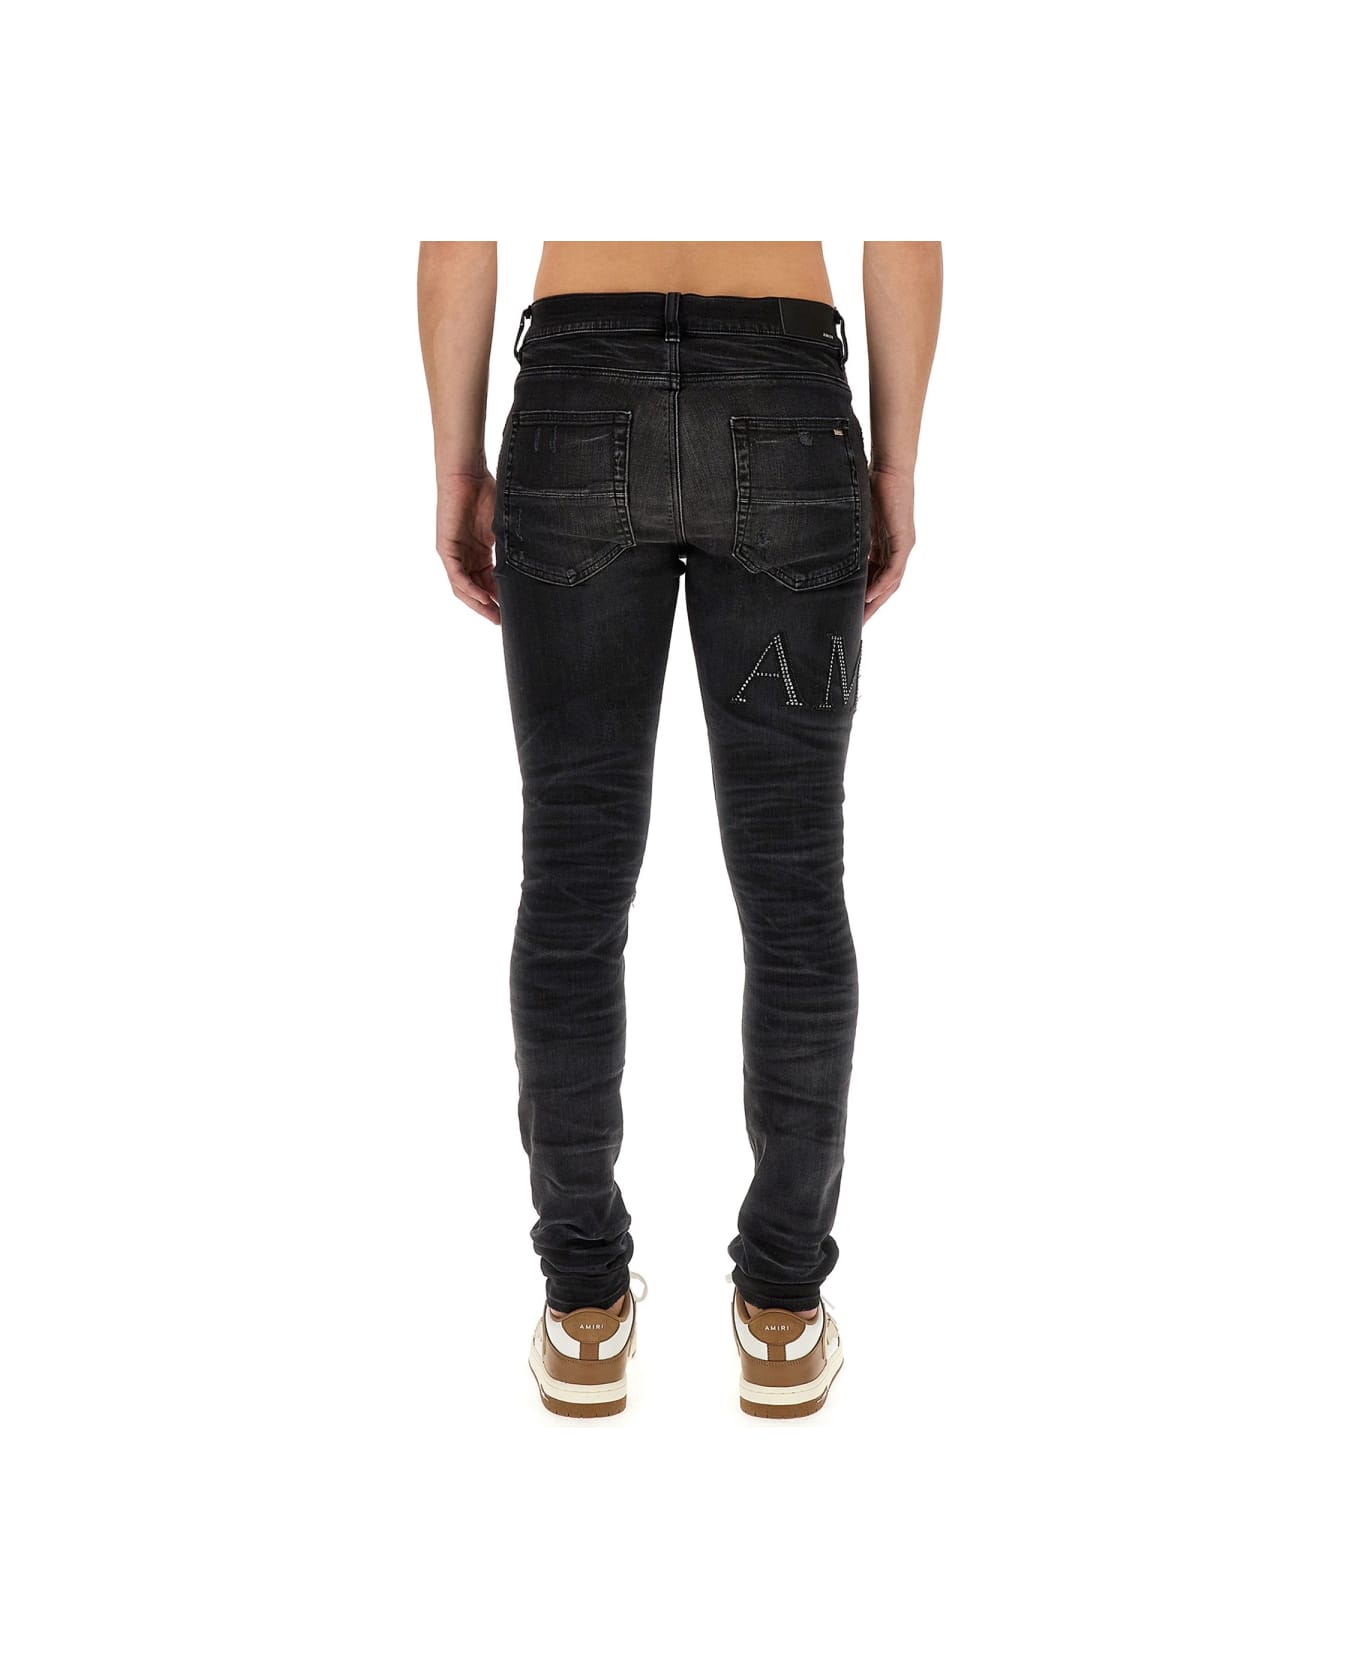 AMIRI Slim Fit Jeans - BLACK デニム